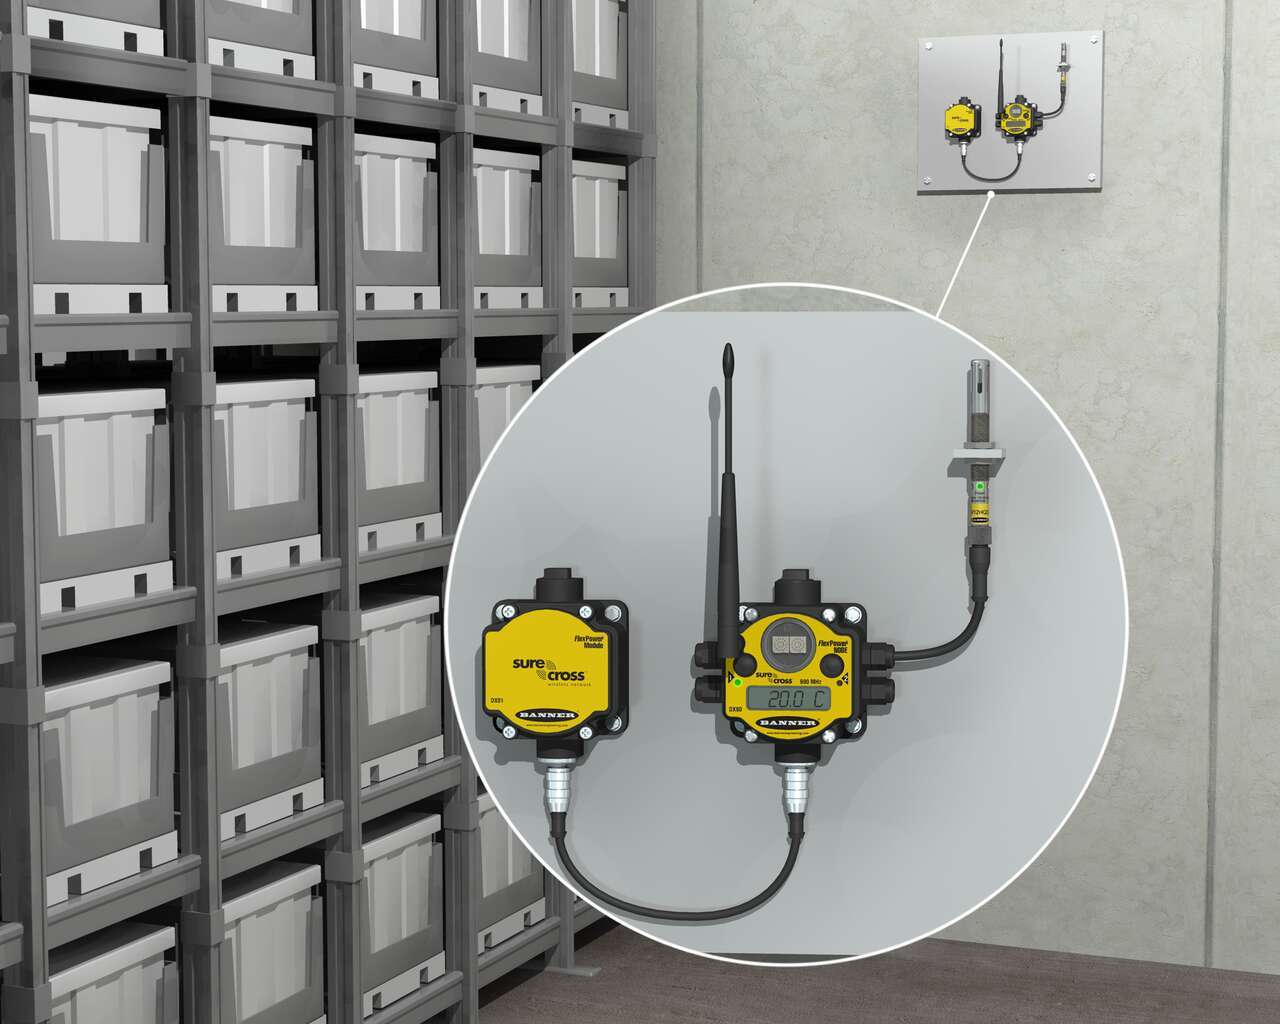 Automatic Storage & Retrieval System